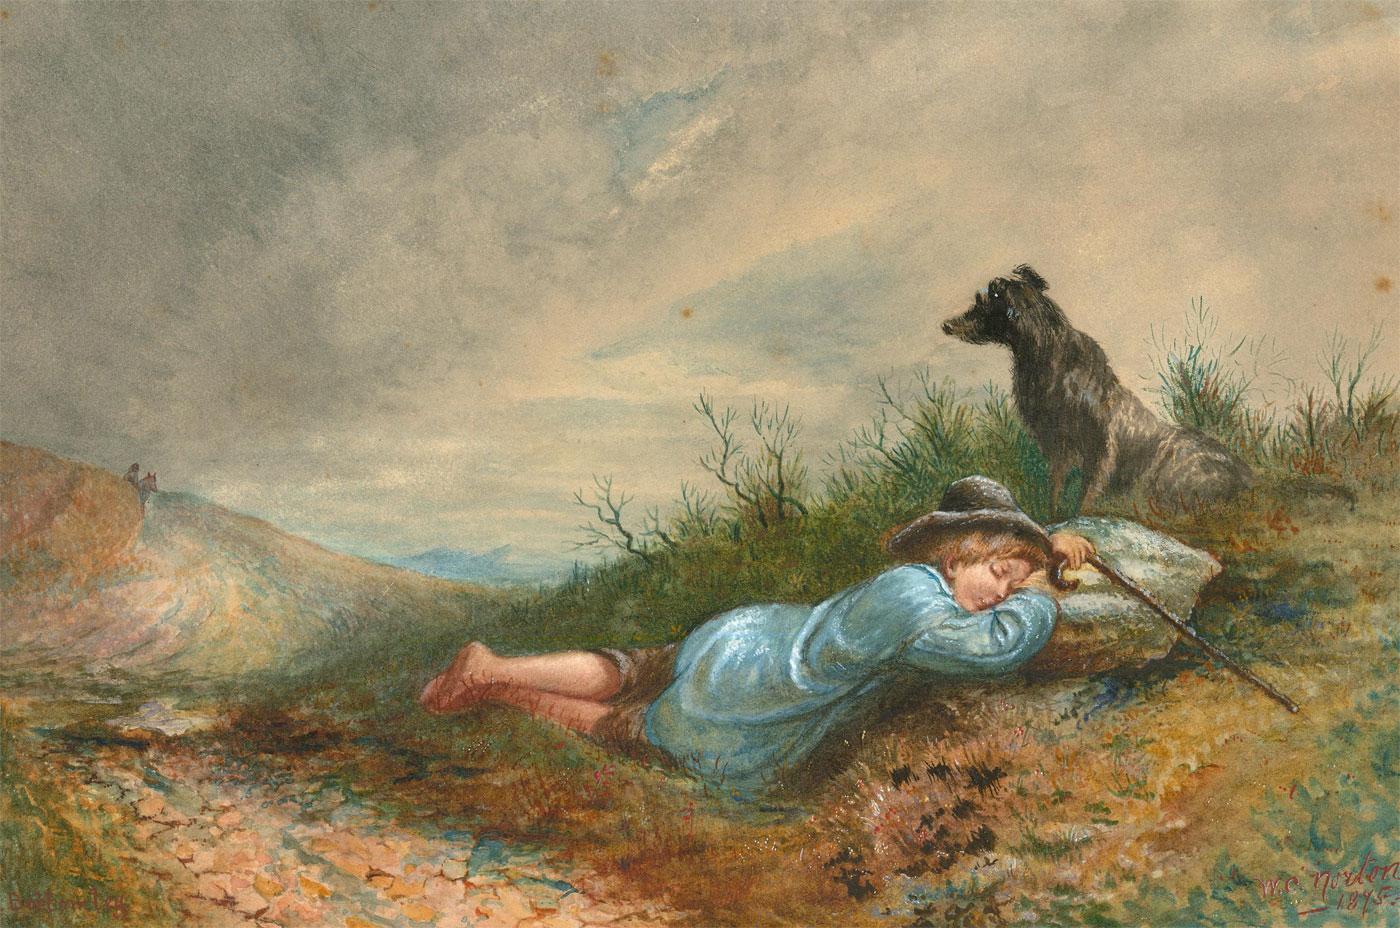 Unknown Landscape Art - W. C. Norton  - 1845 Watercolour, A Watchful Eye